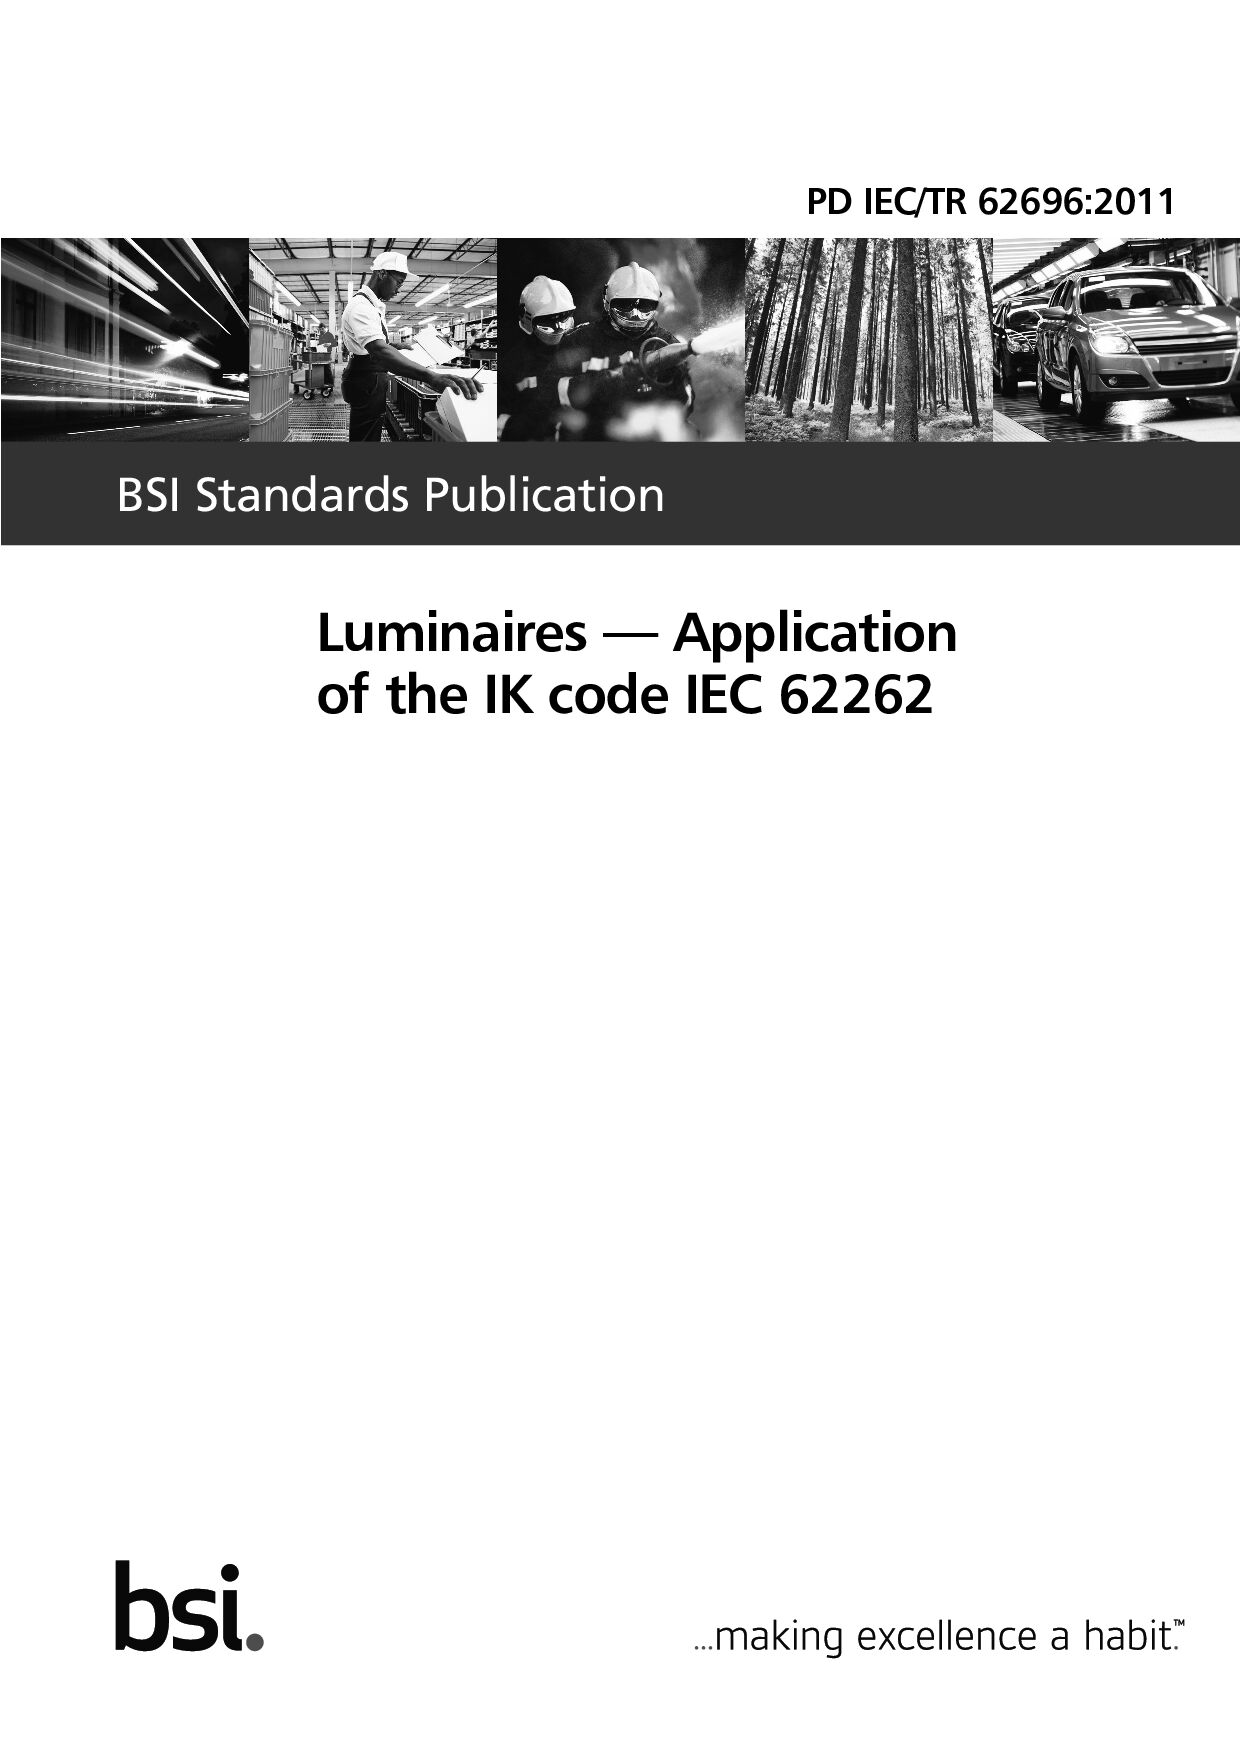 PD IEC/TR 62696:2011封面图